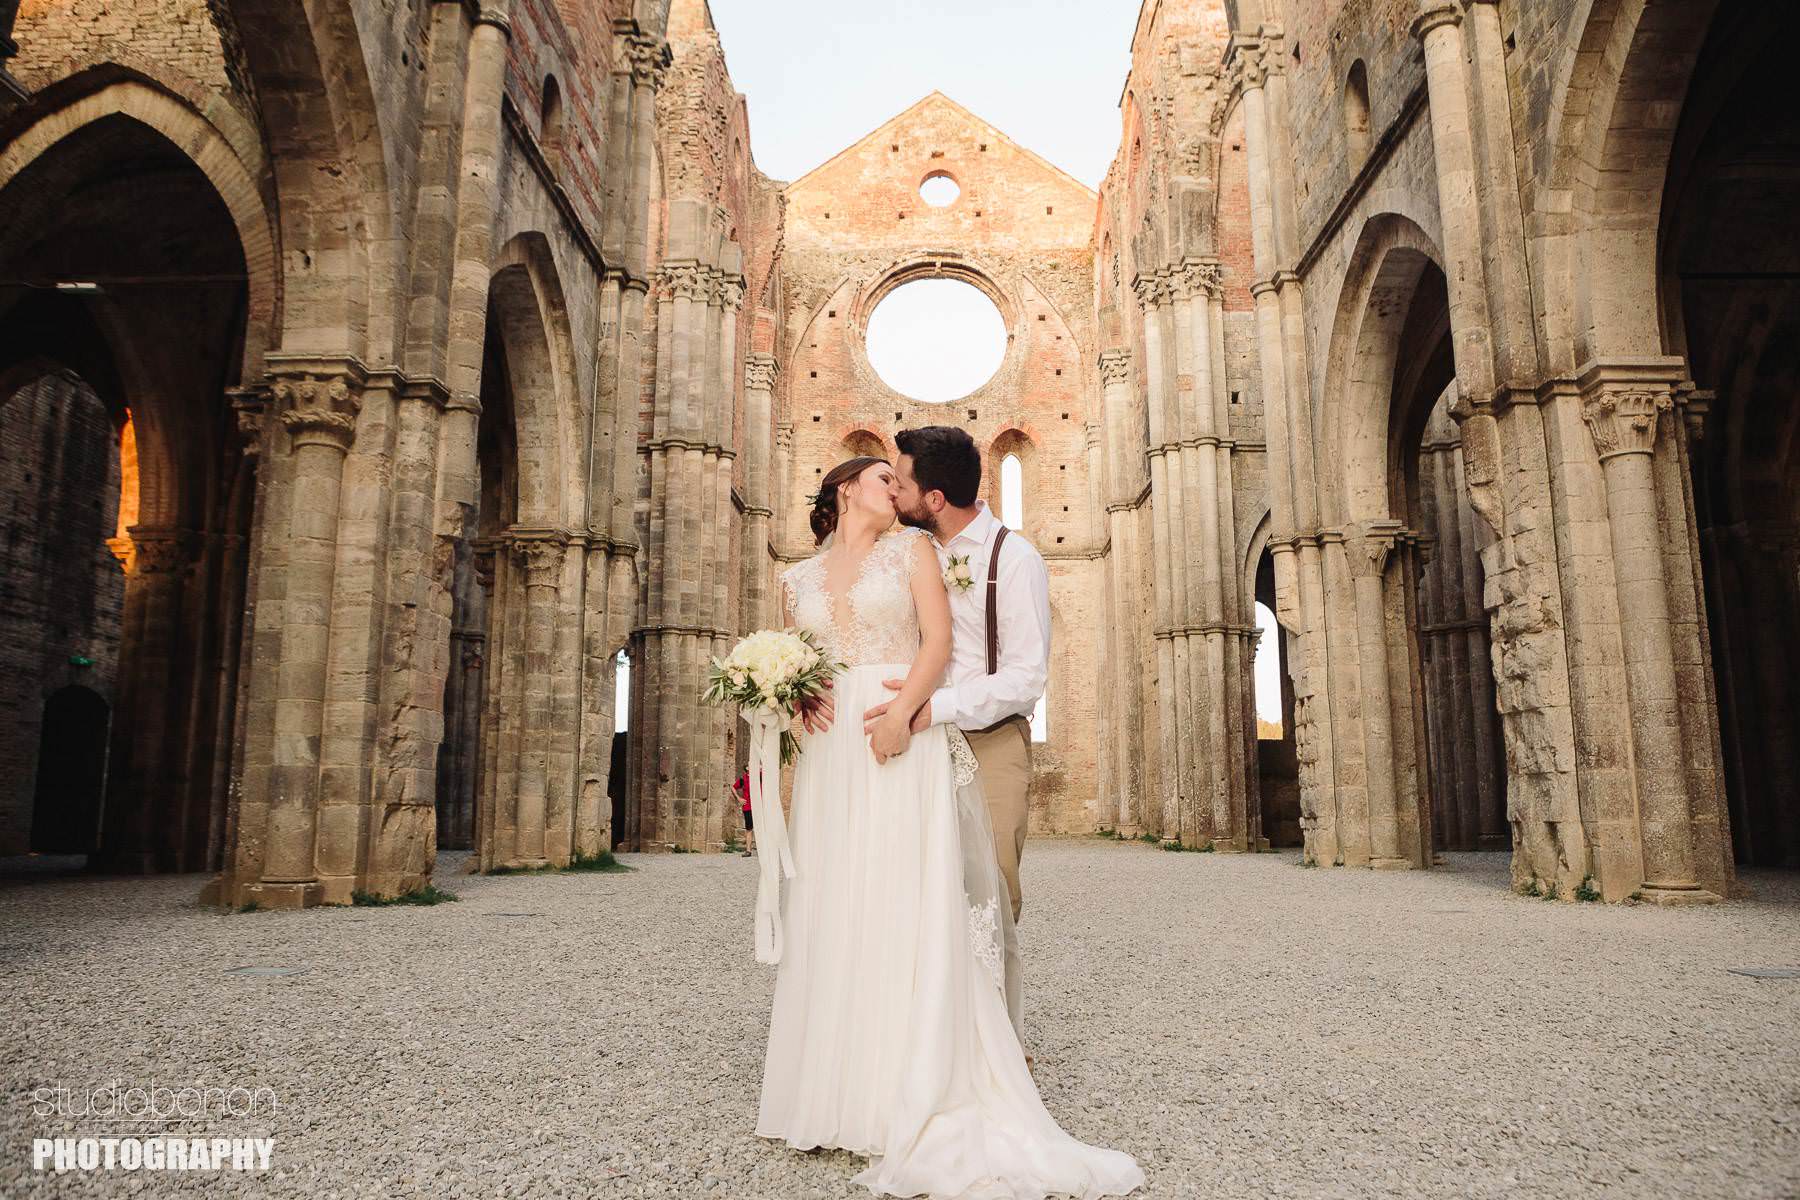 Rustic Tuscany countryside intimate wedding at Tenuta di Papena and Roofless Abbey of San Galagano